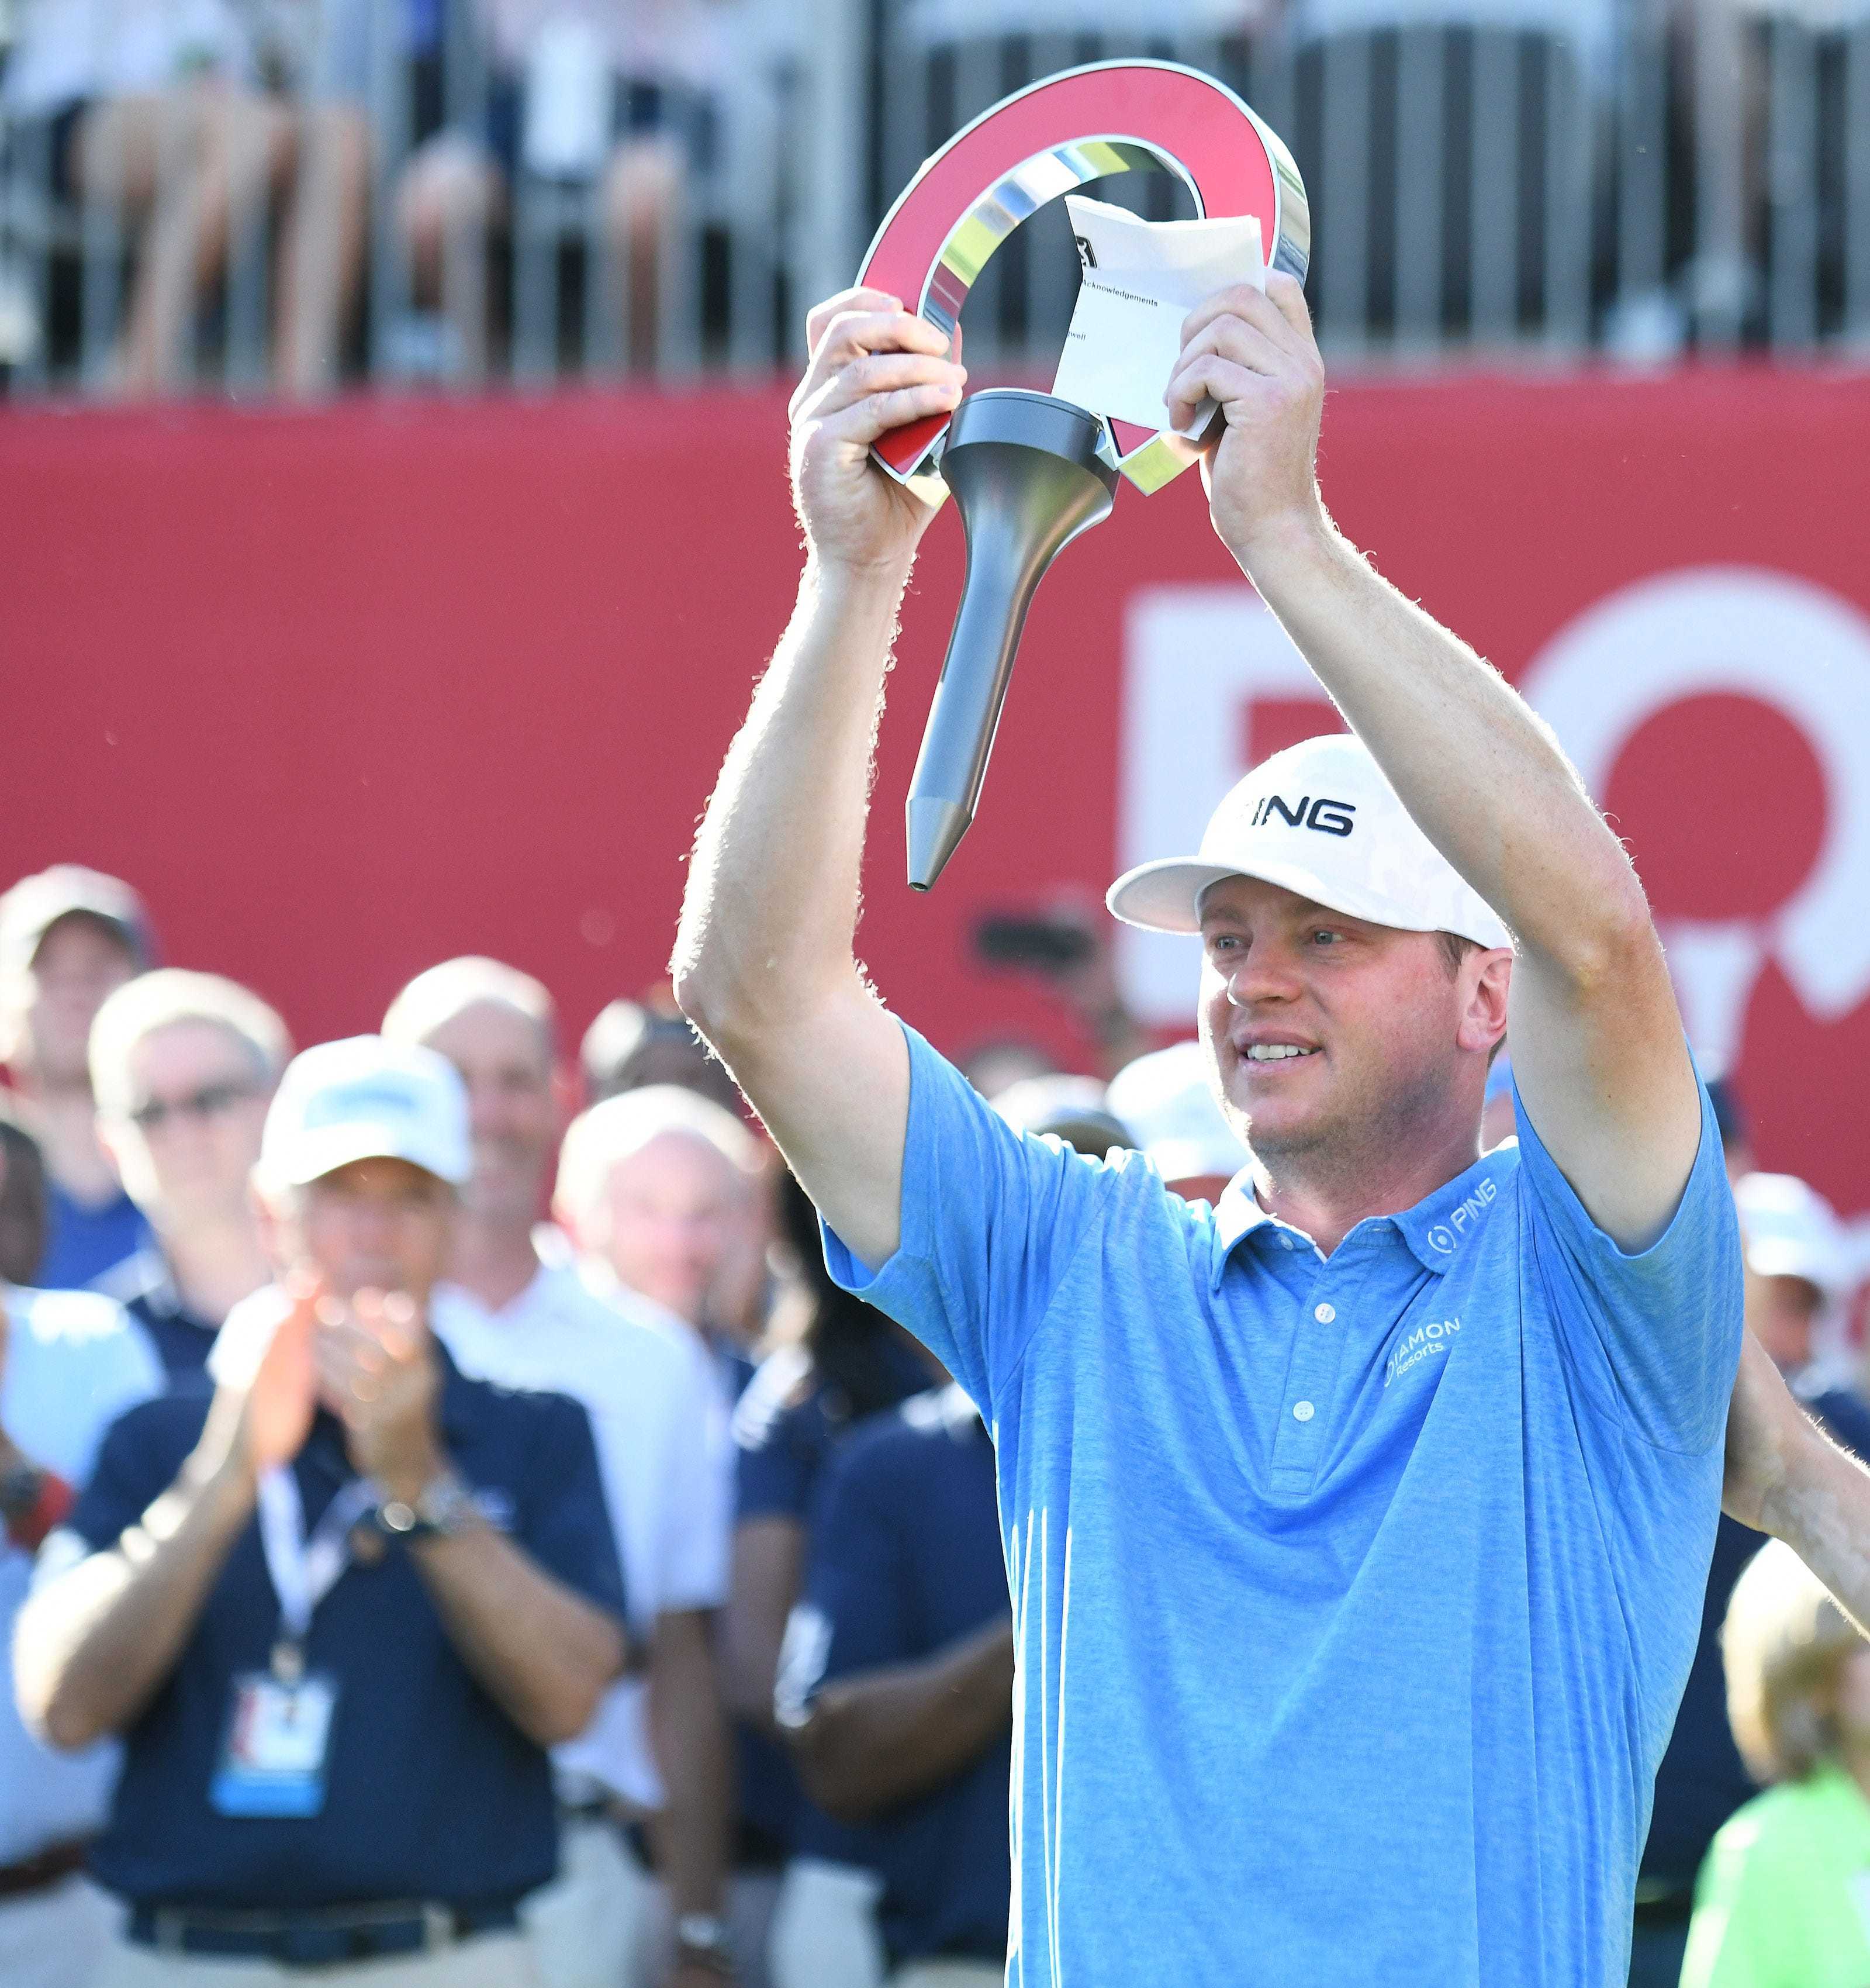 Nate Lashley won the inaugural Rocket Mortgage Classic at Detroit Golf Club in 2019.